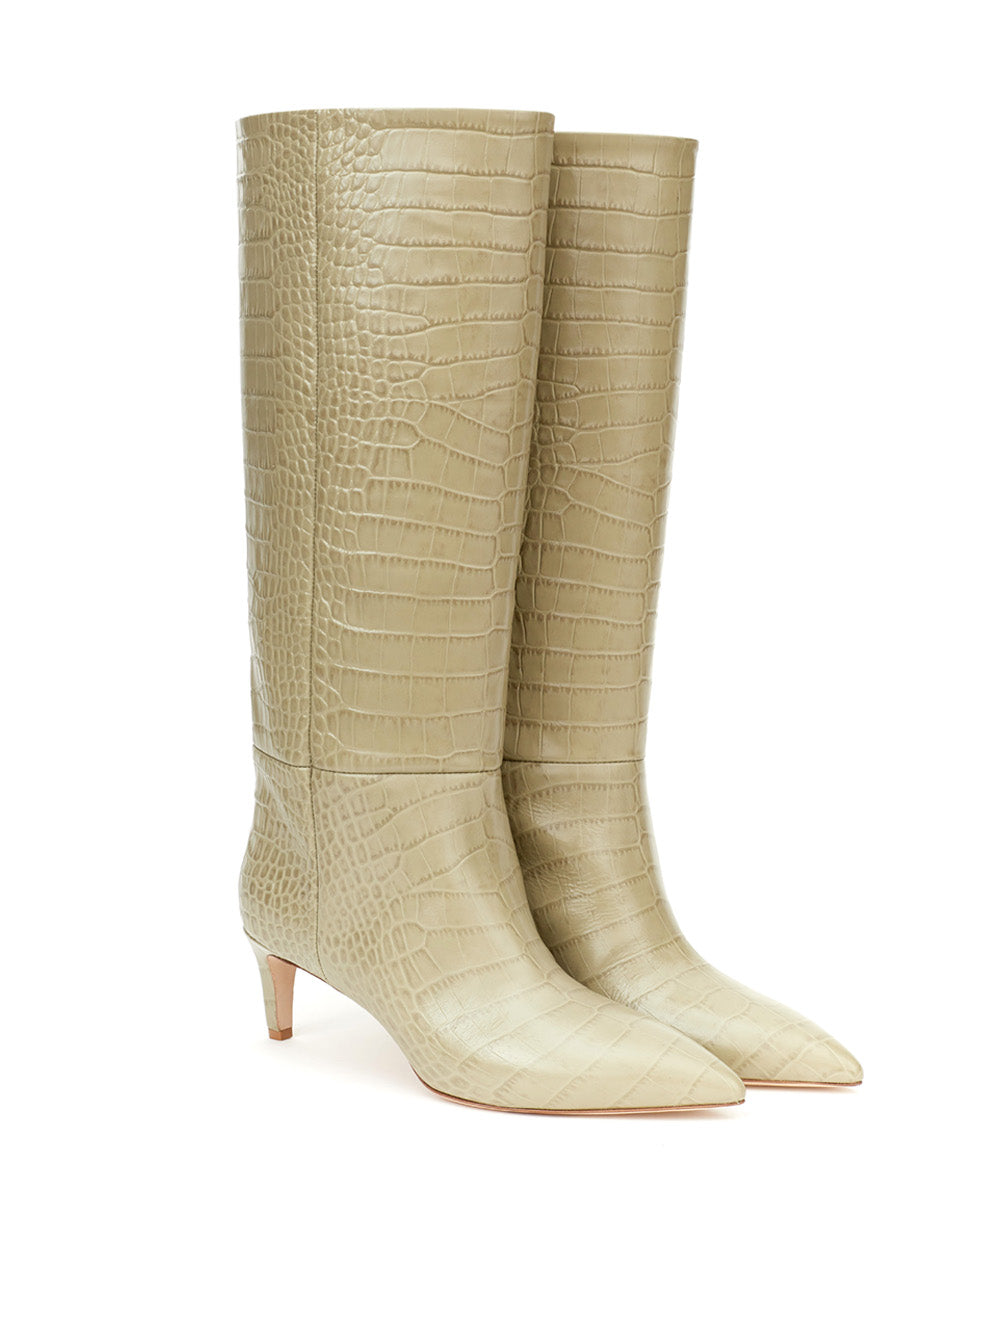 Boot 85 stiletto in Paris Texas croco print leather